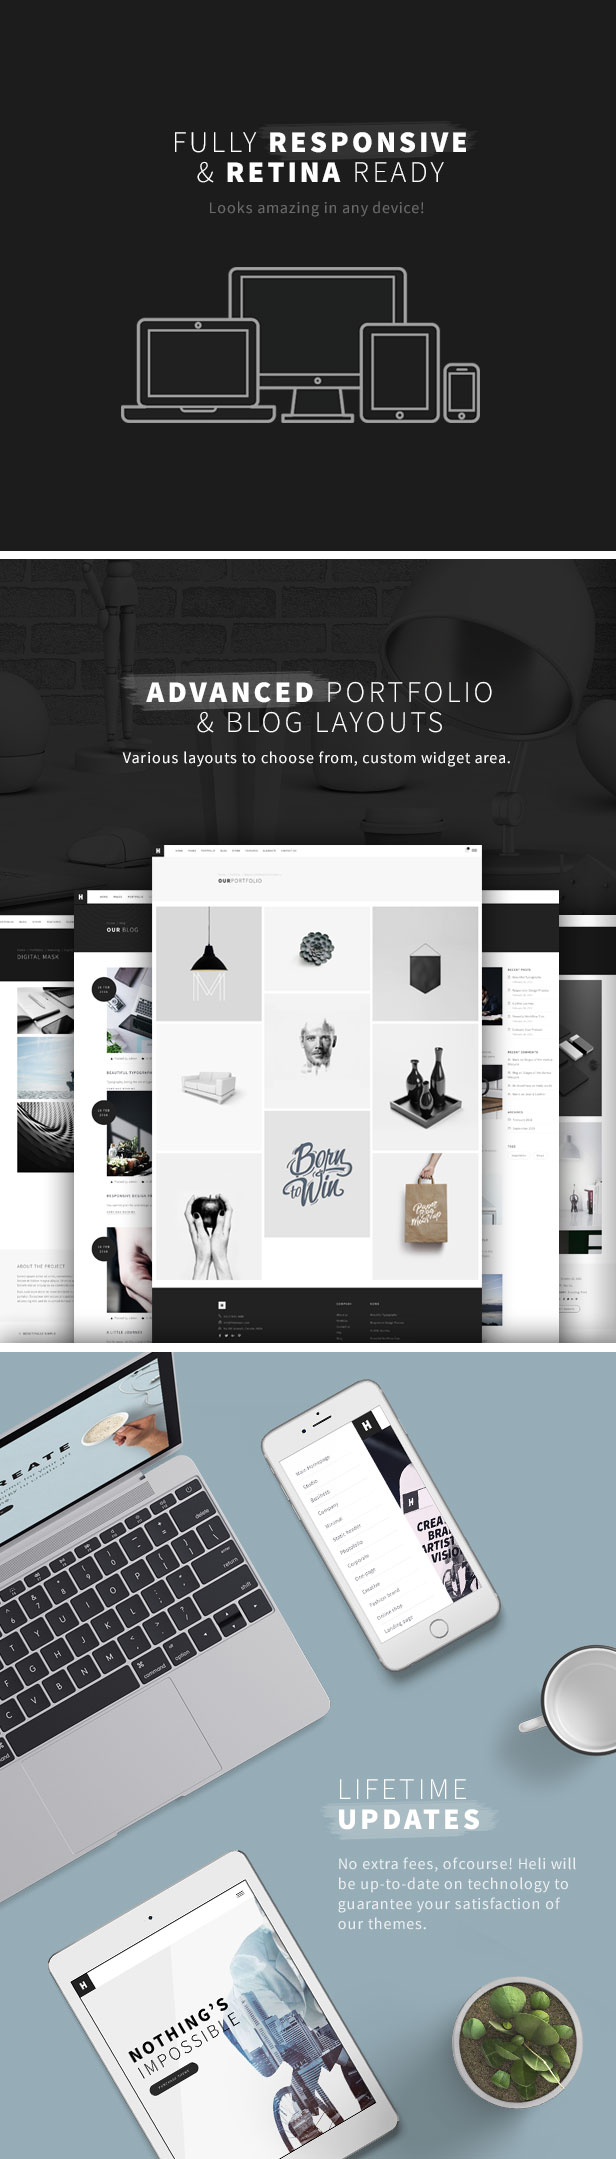 rMinimal Creative Black and White WordPress Theme - esponsive & retina